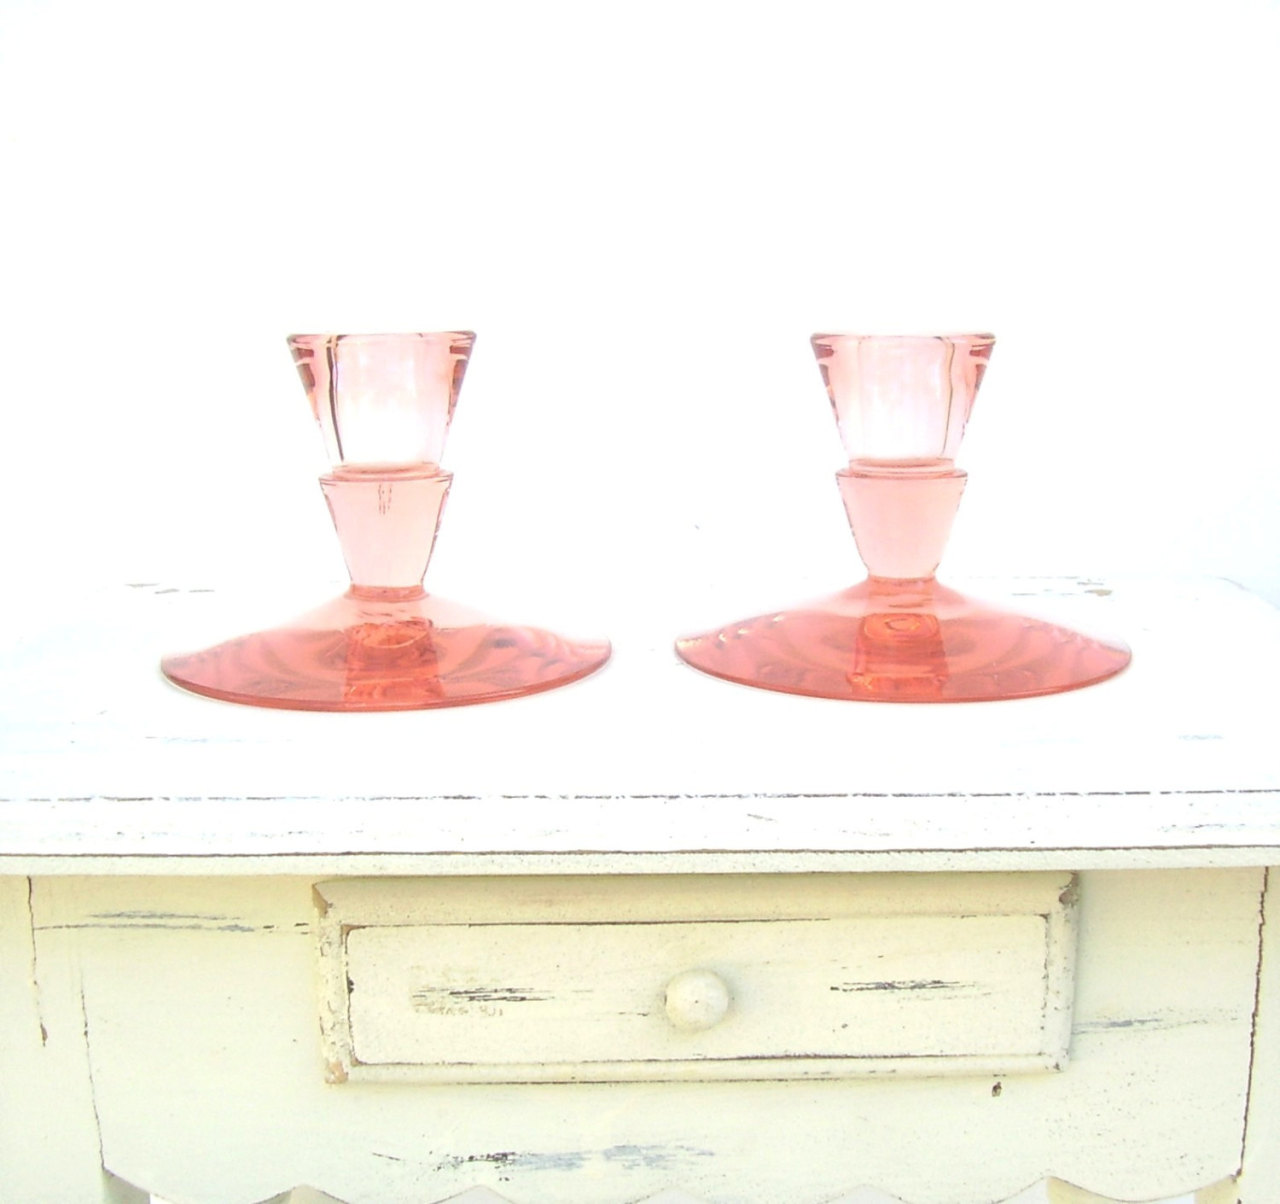 Antique Candlesticks Art Deco Pink Depression Glass 1930s by OceansideCastle (47.99 USD) http://ift.tt/1j8hXCS